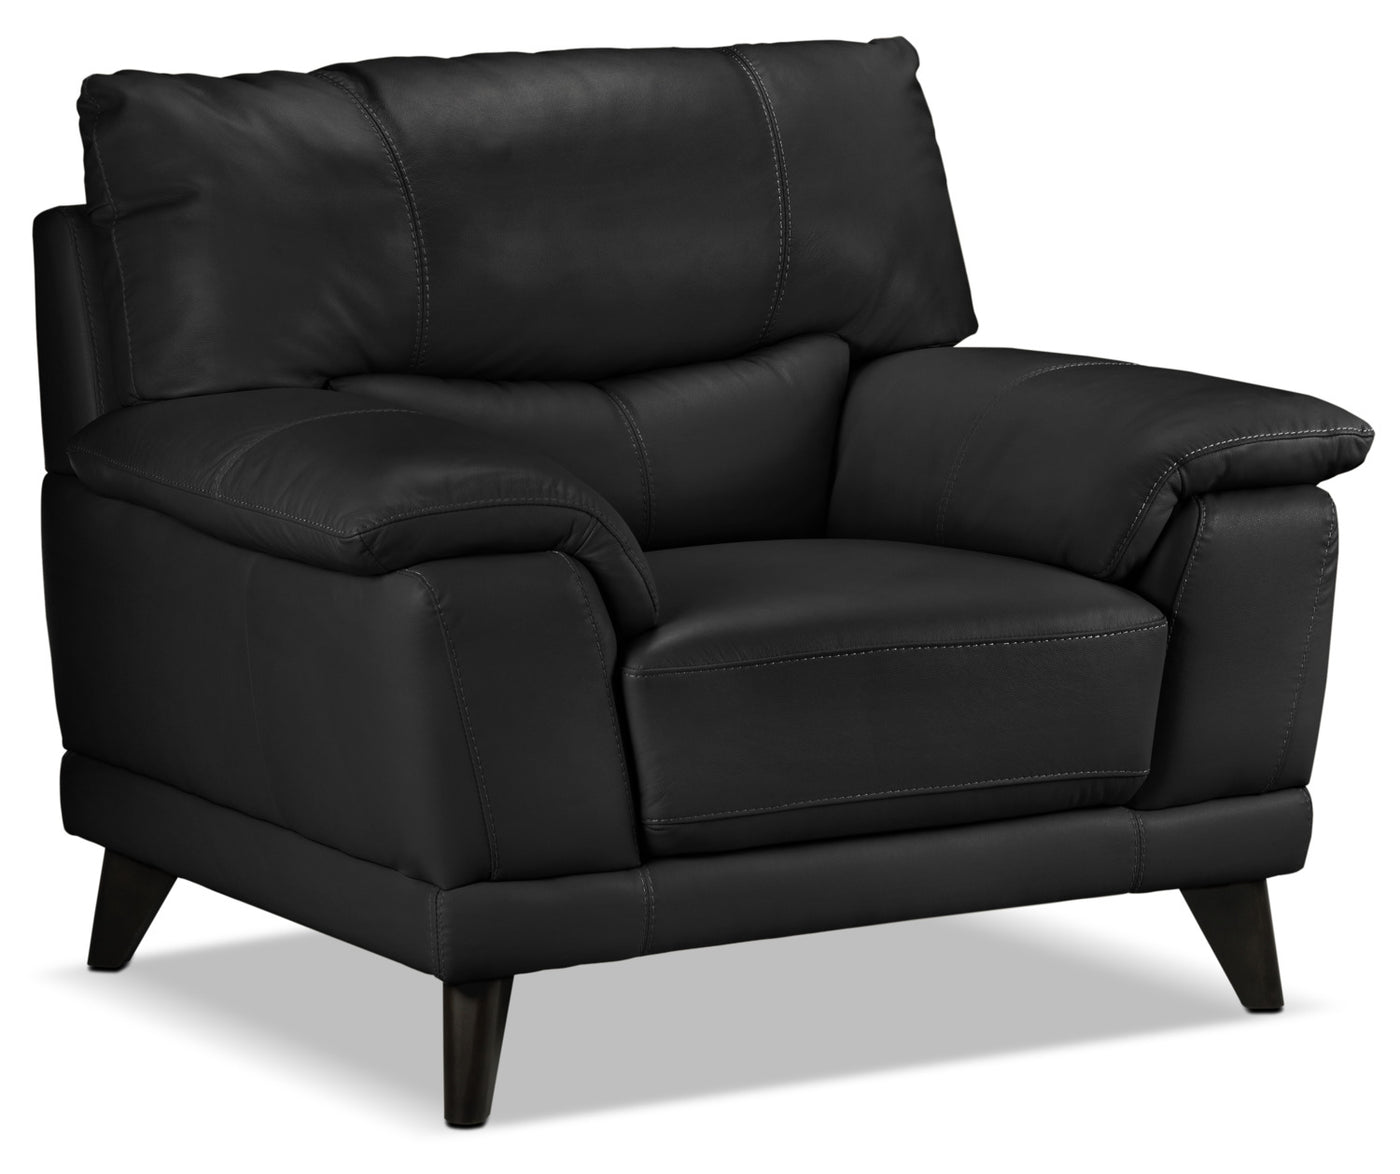 Braylon Leather Sofa and Chair Set - Classic Black